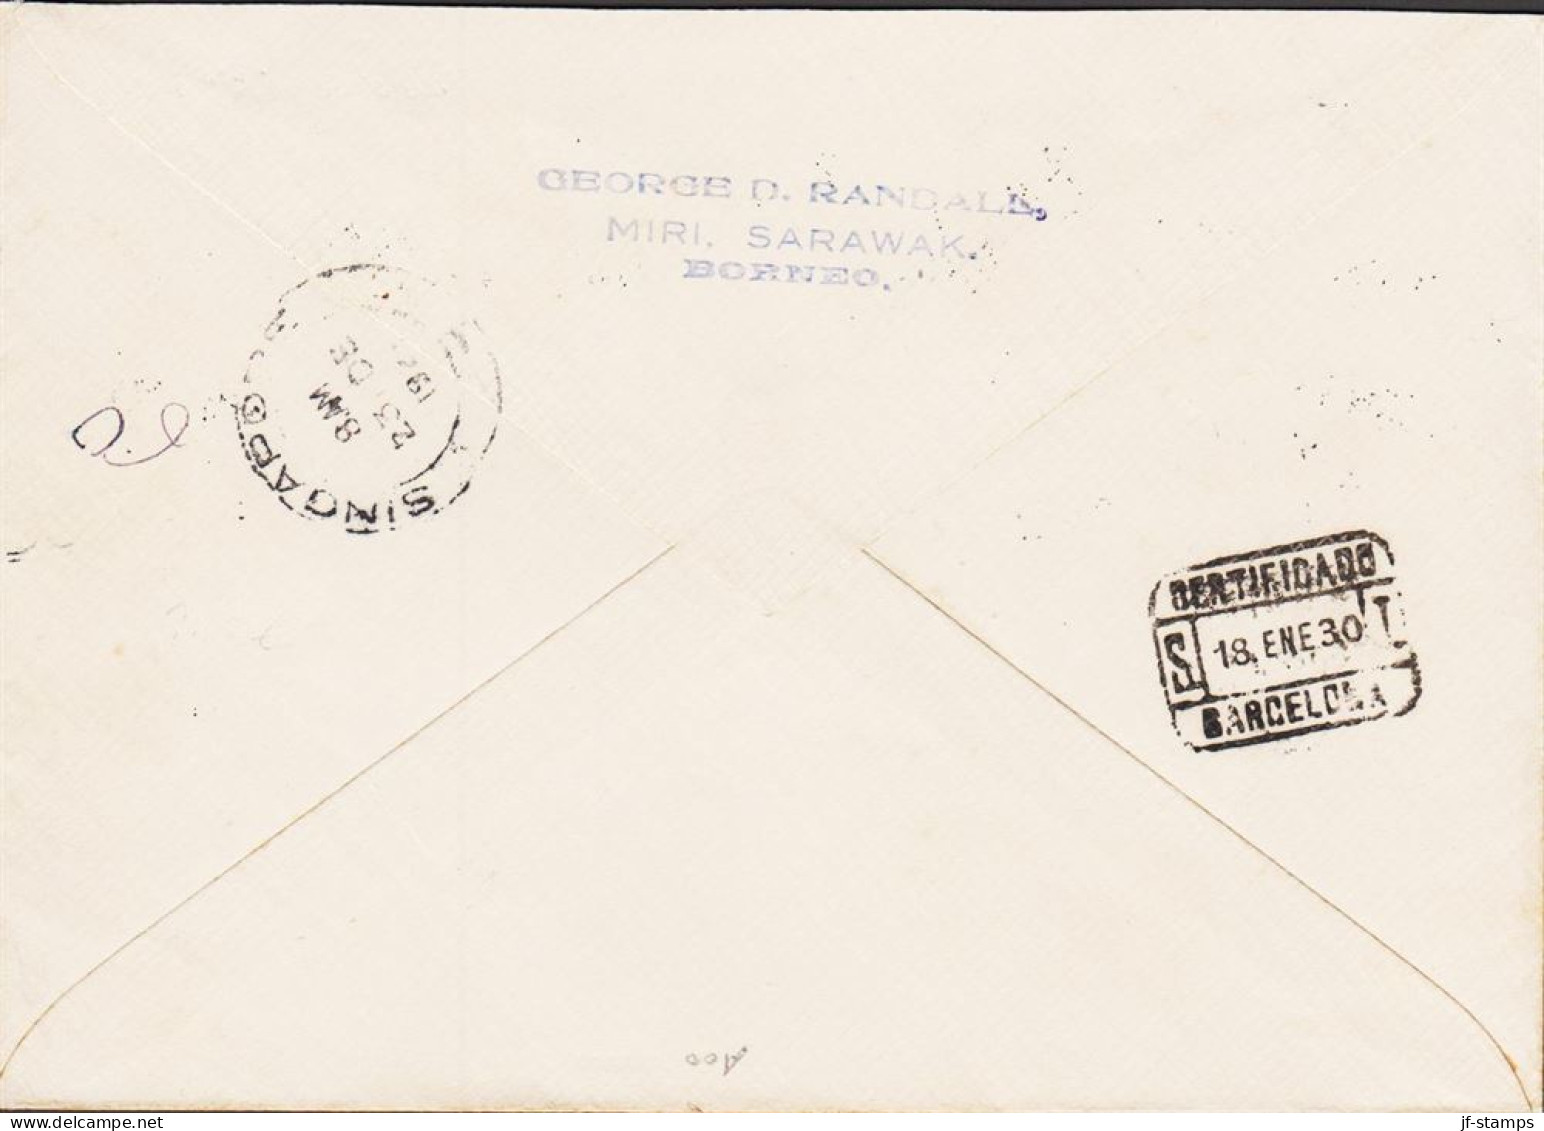 1929. NORTH BORNEO. Country Motives. 1, 2, 3, 4, 5, 12 C. Perf. 12½ On Registered Envel... (MICHEL 202, 206+) - JF544634 - Bornéo Du Nord (...-1963)